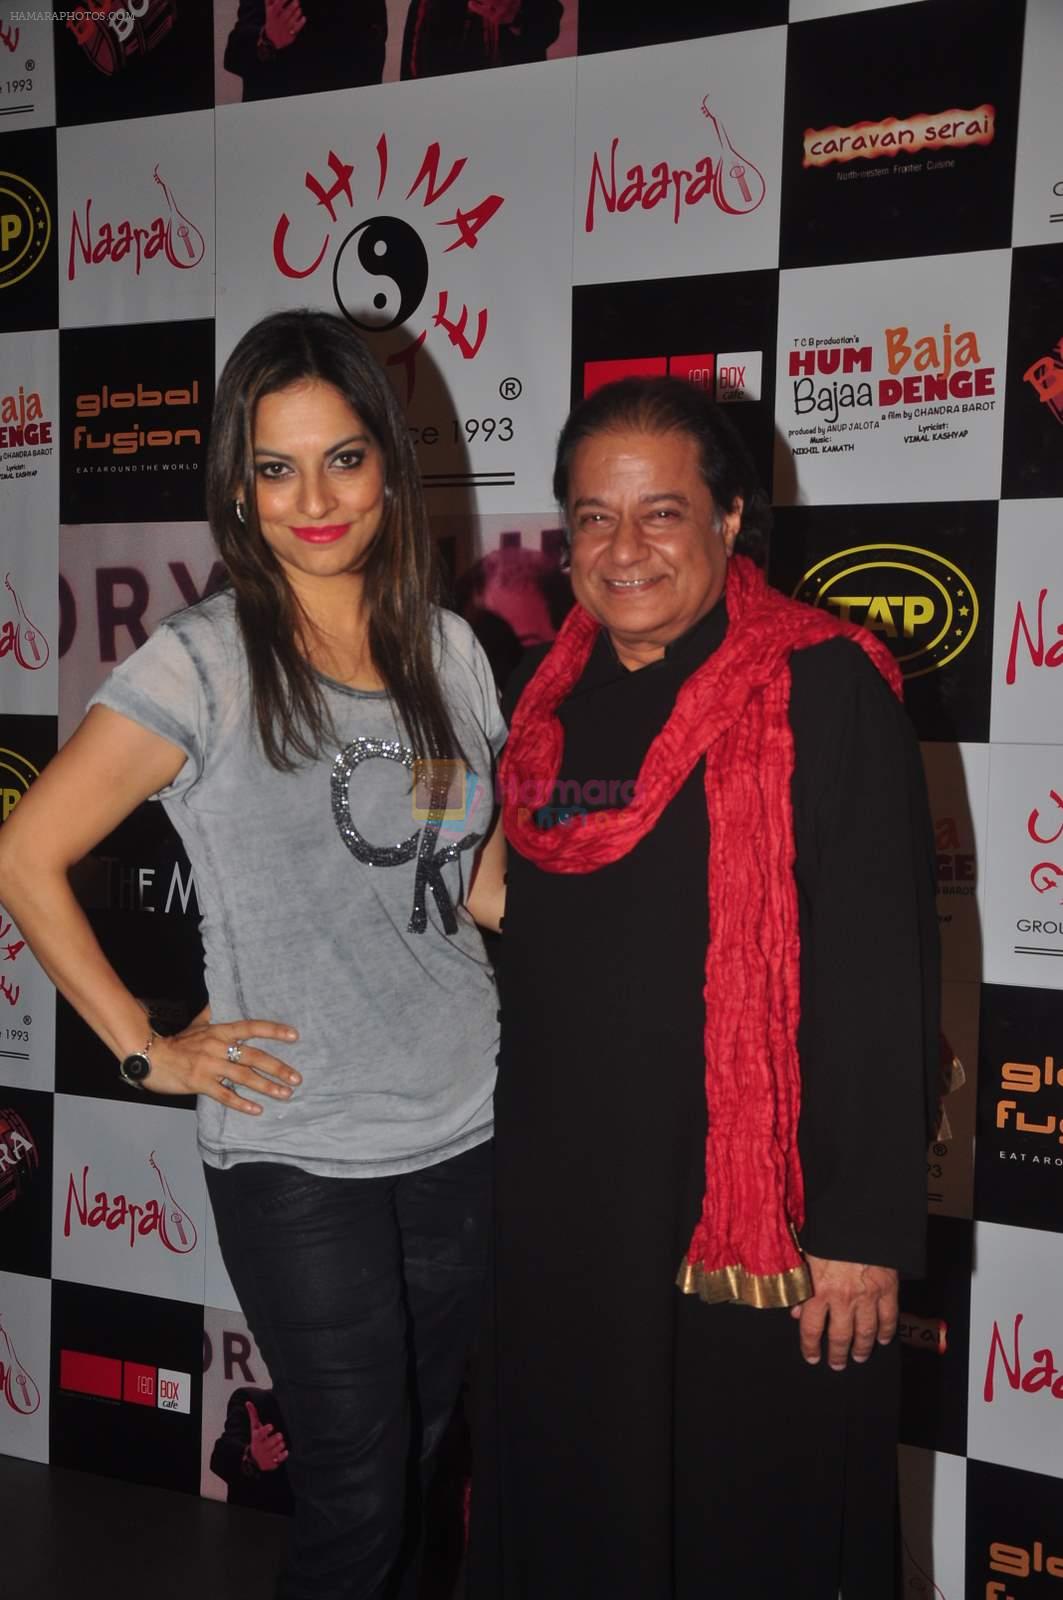 Preety Bhalla, Anup Jalota at the launch of Anup Jalota & Pankaj Udhas's song Zindagi from film Hum Baaja Baja Denge in Bandra on 17th March 2015